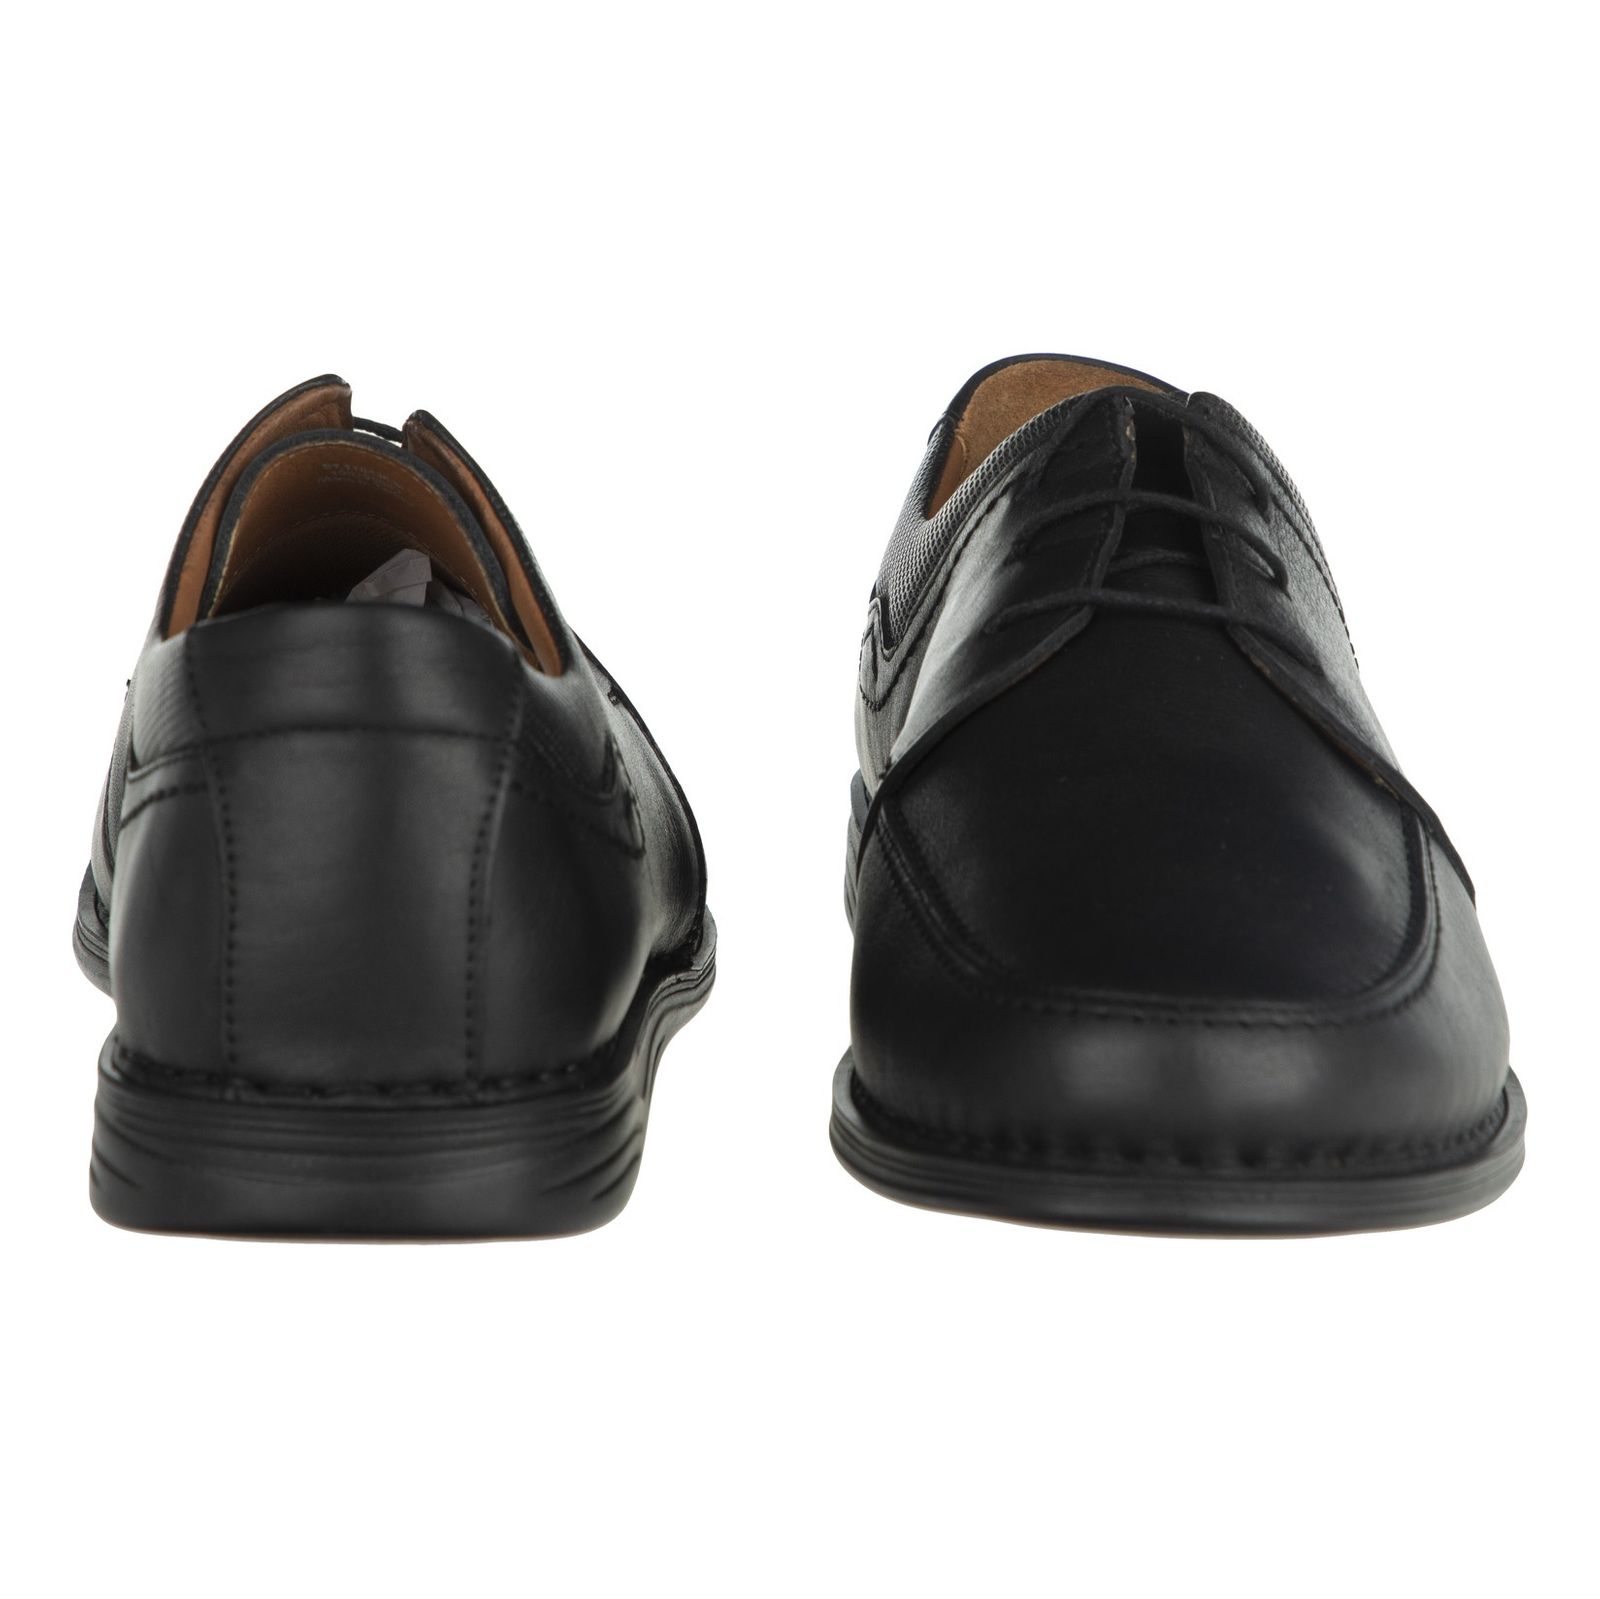 کفش مردانه پولاریس مدل 100296943-101 - مشکی - 5